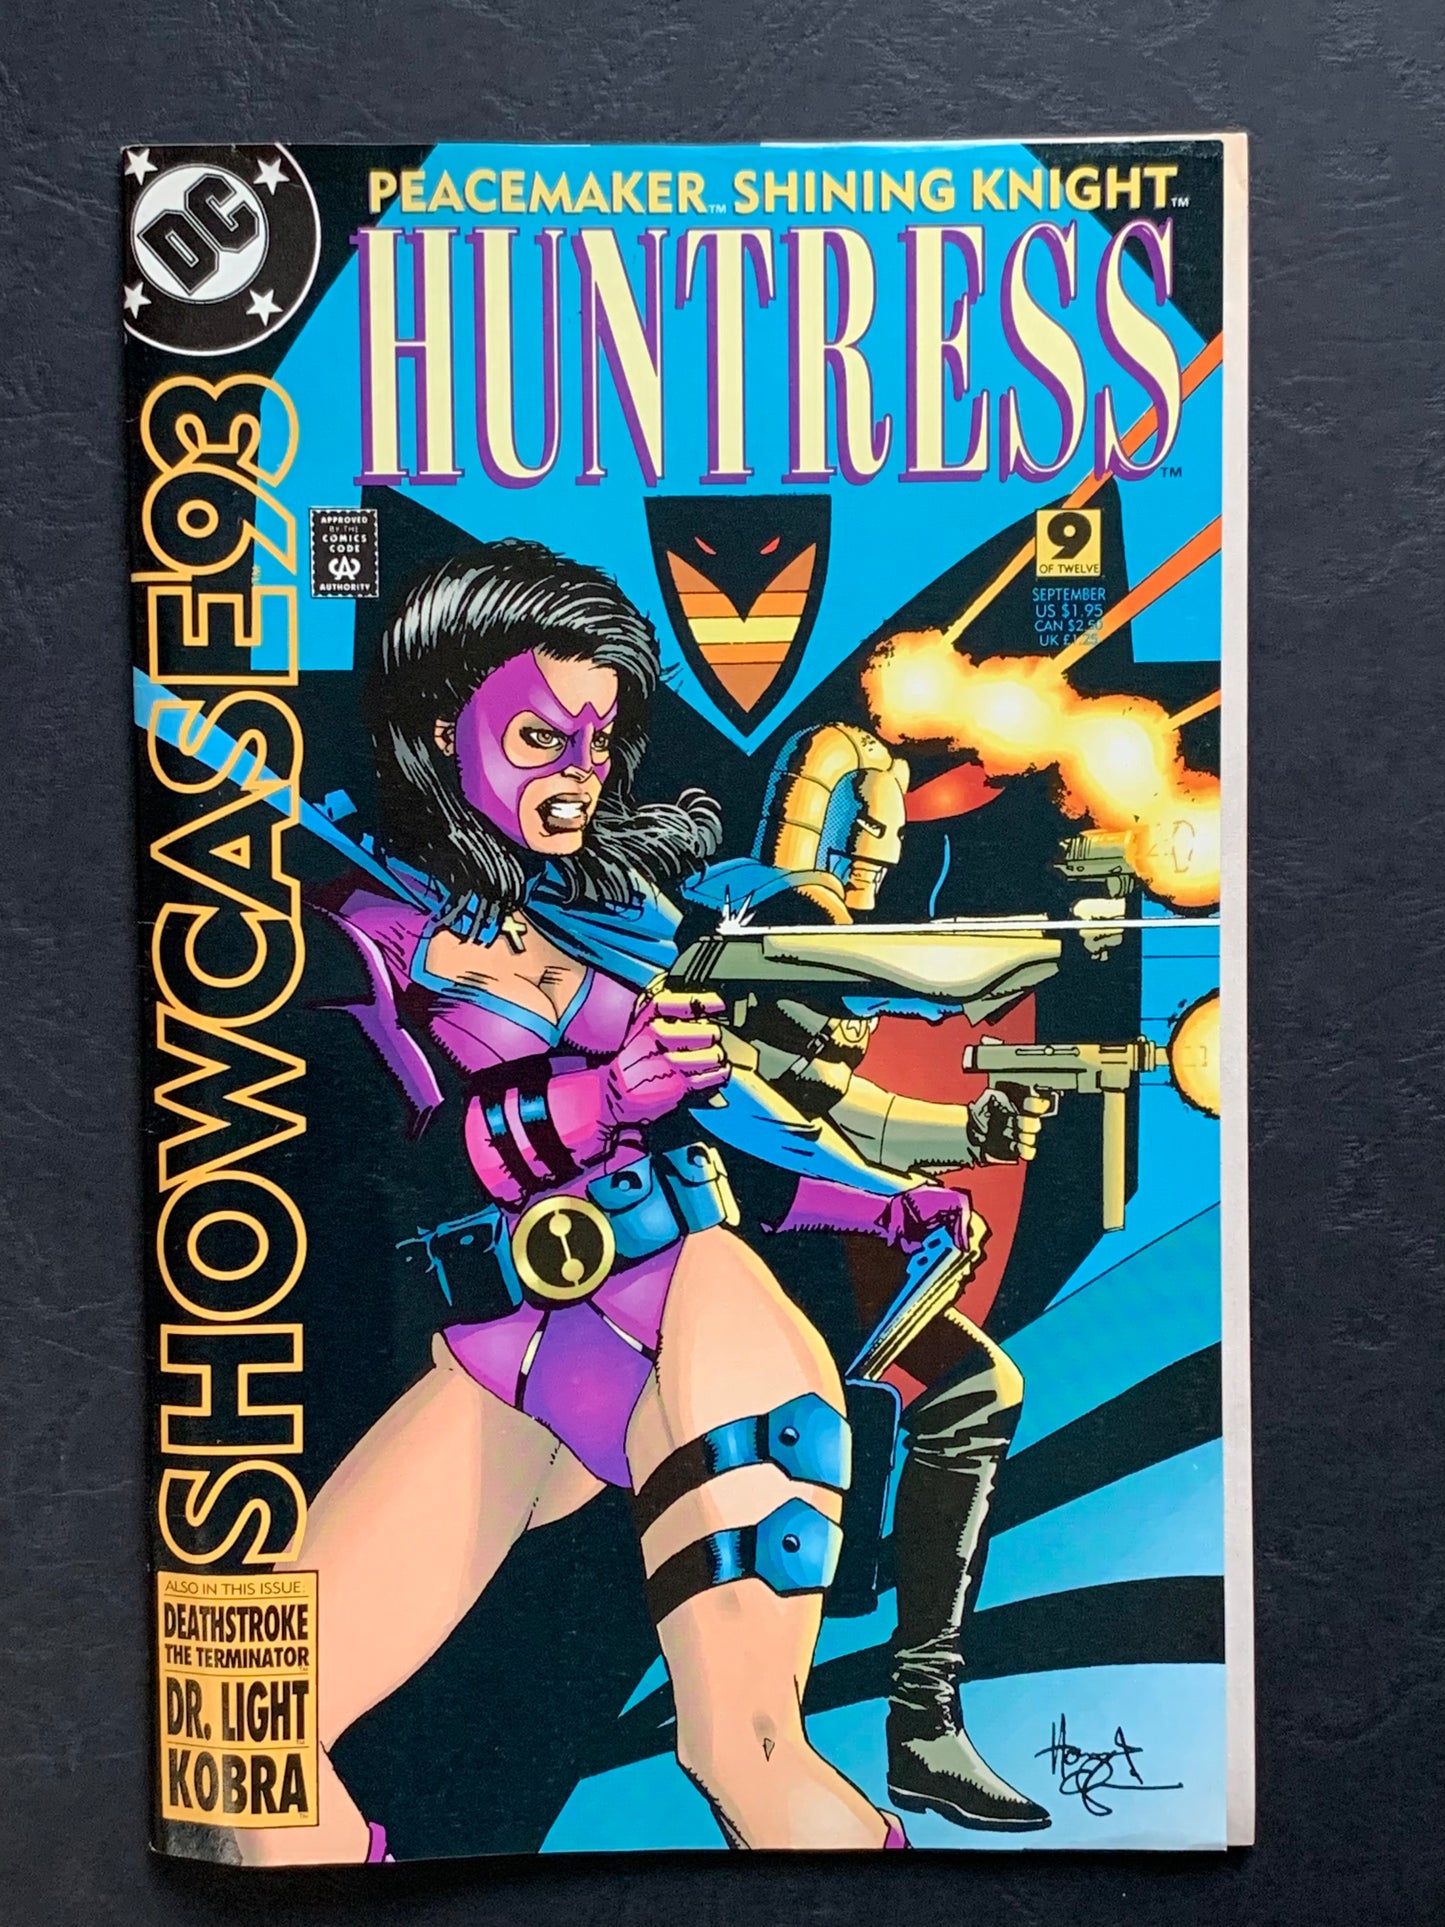 Huntress Issue 9